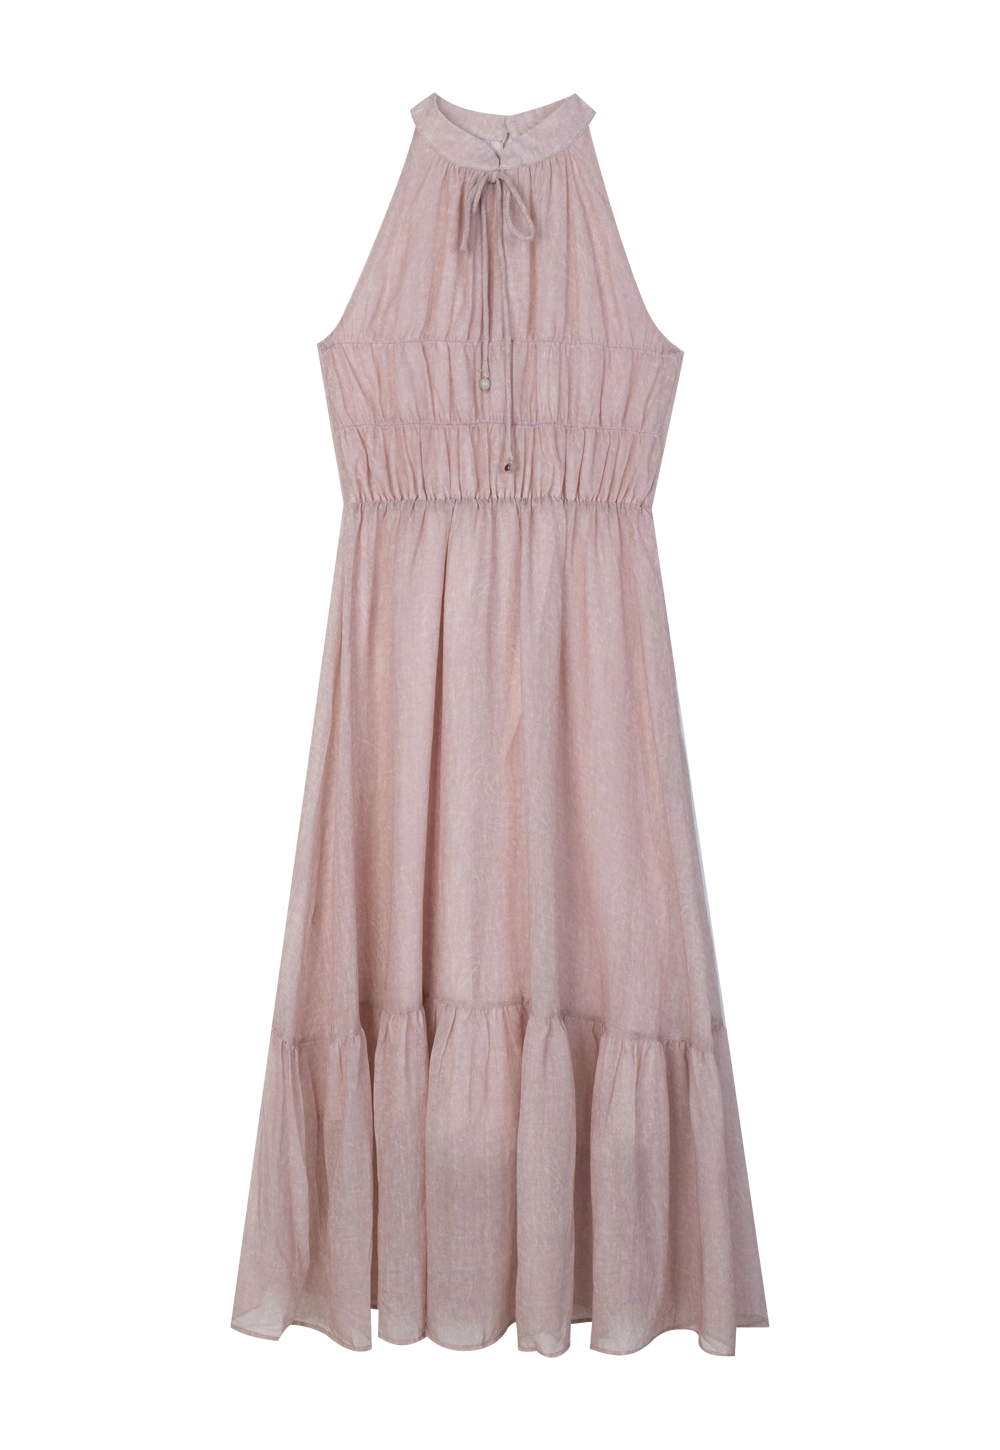 Light Pink Halter Neck Maxi Dress with Tiered Skirt - Flowy Summer Elegance